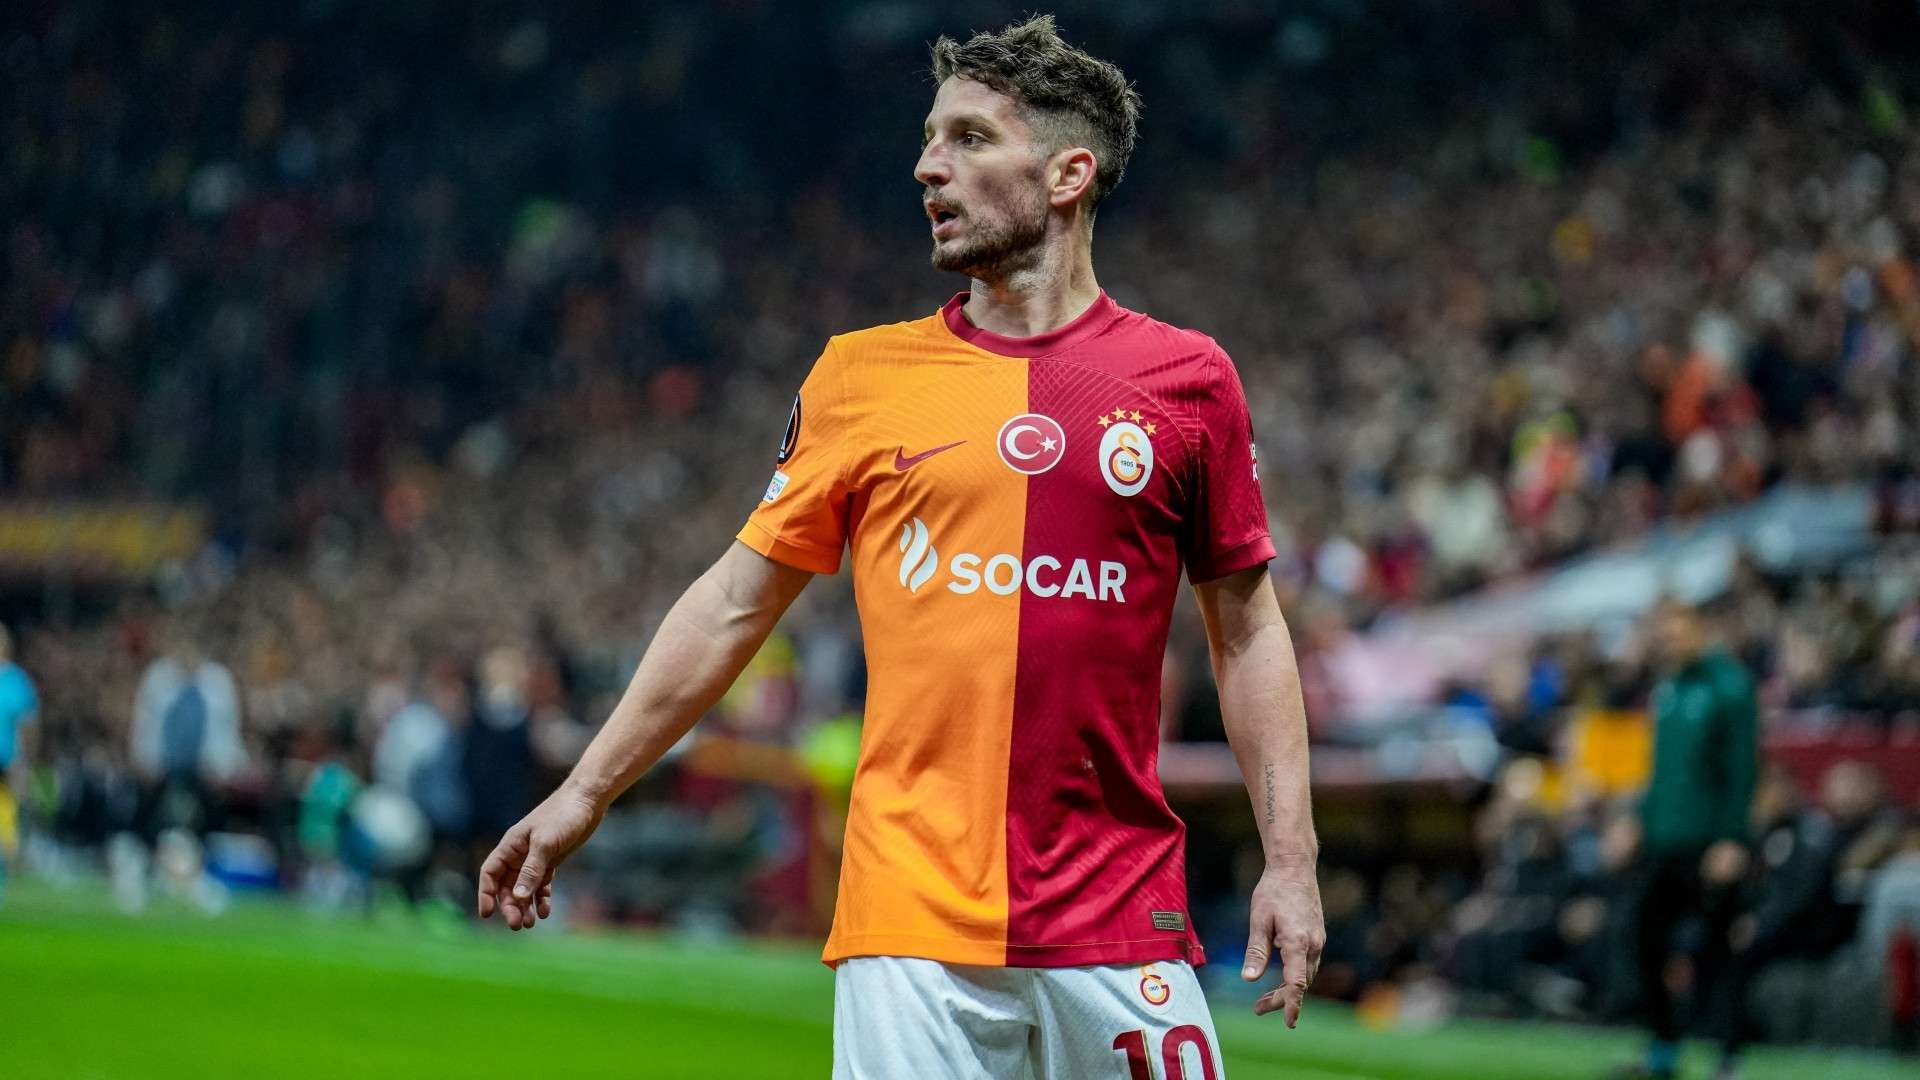 Dries Mertens of Galatasaray